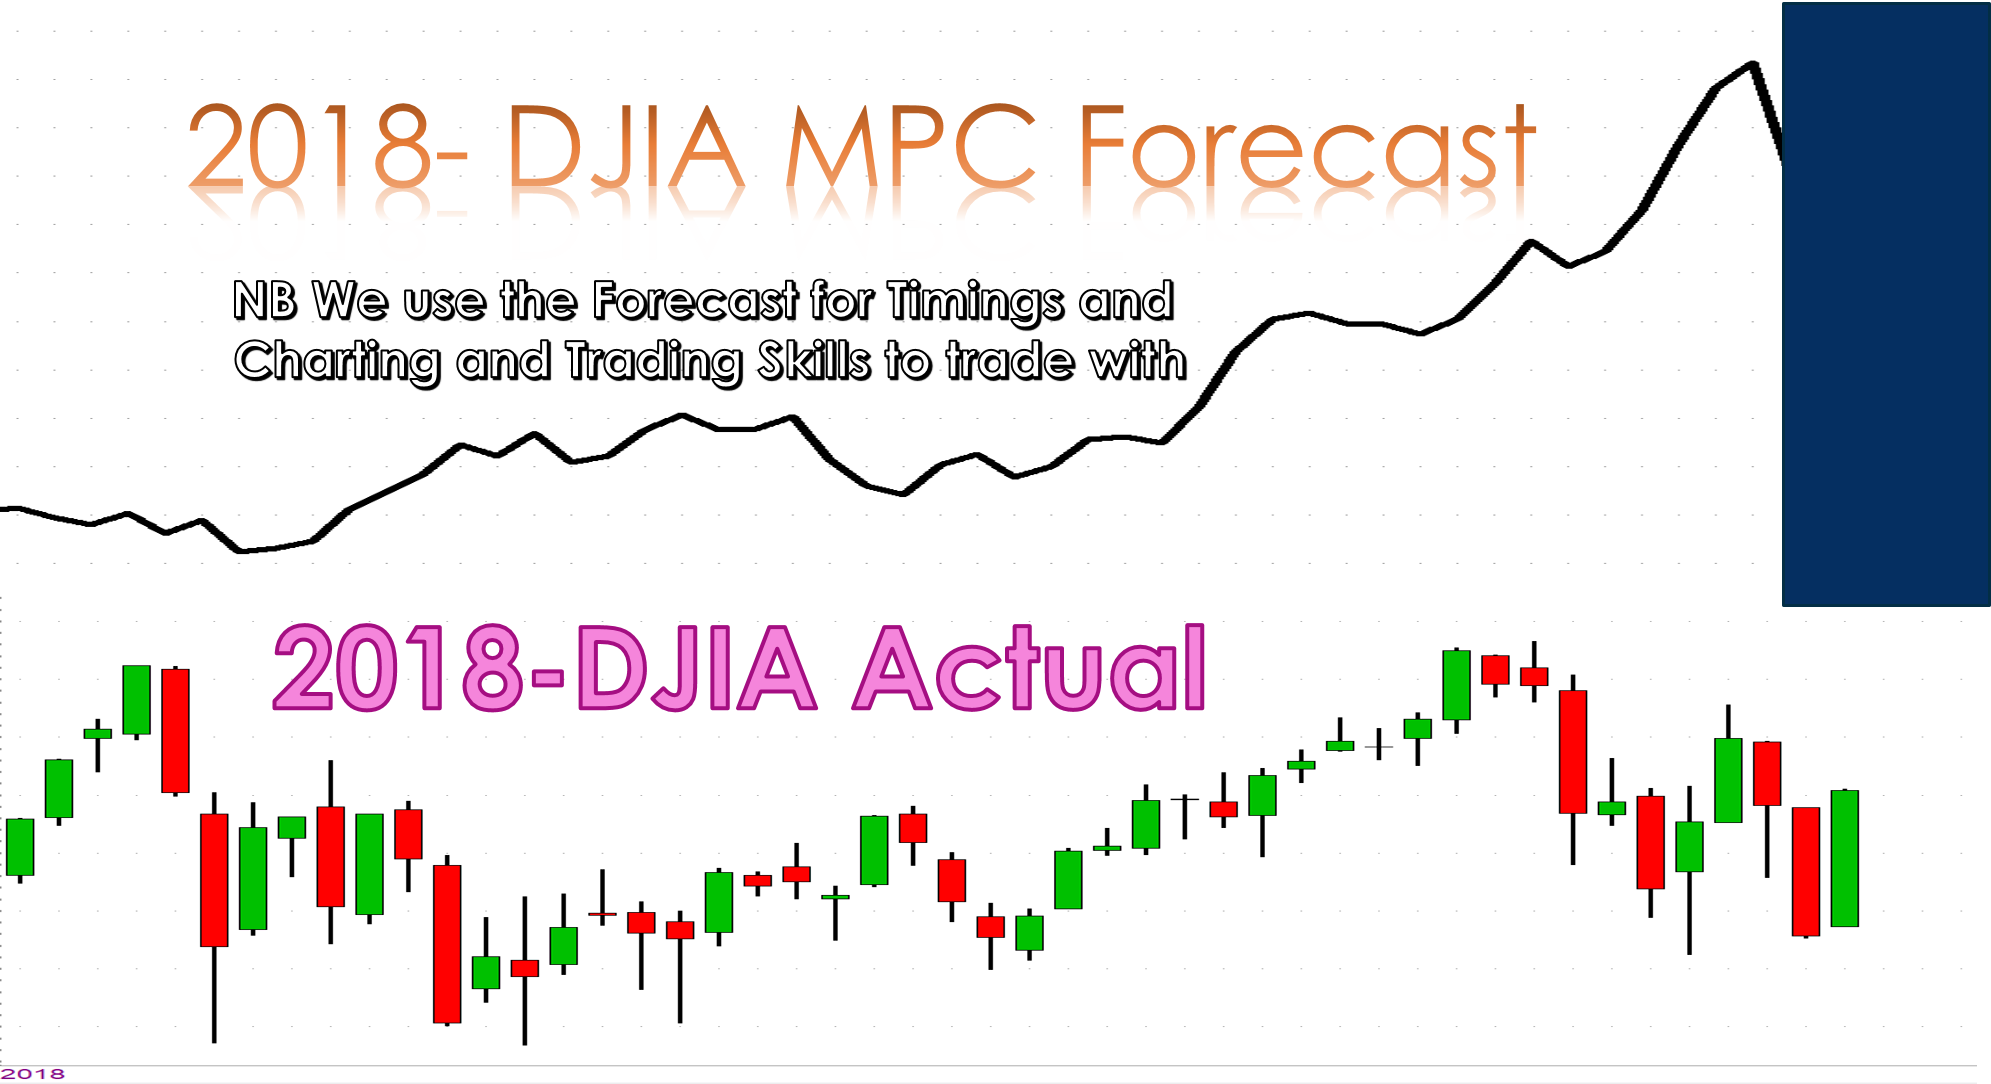 DJIA actual vs forecast